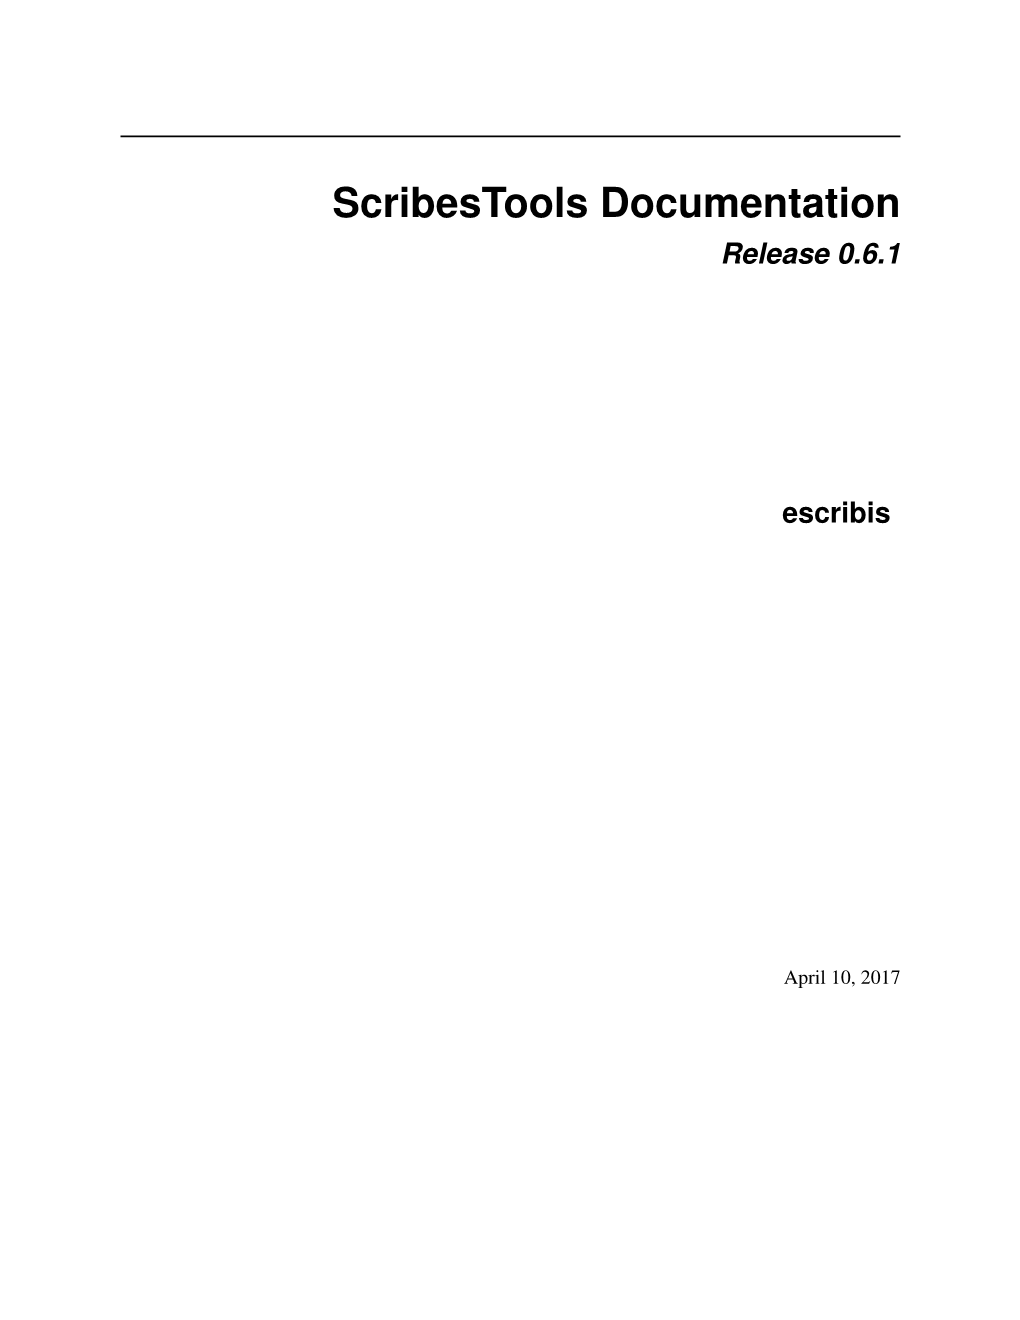 Scribestools Documentation Release 0.6.1